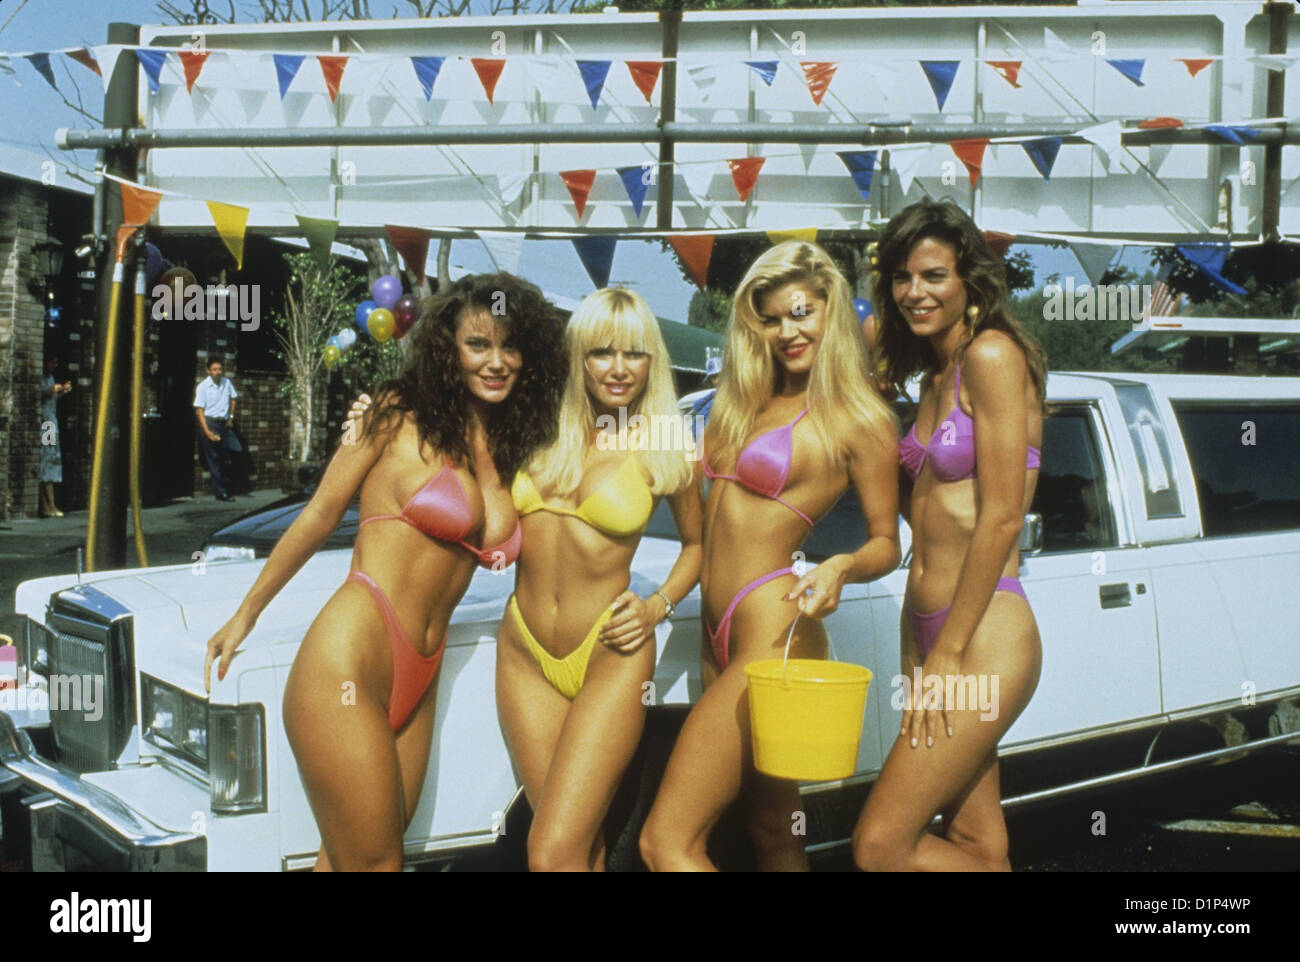 Download this stock image: Bikini Car Wash Ii